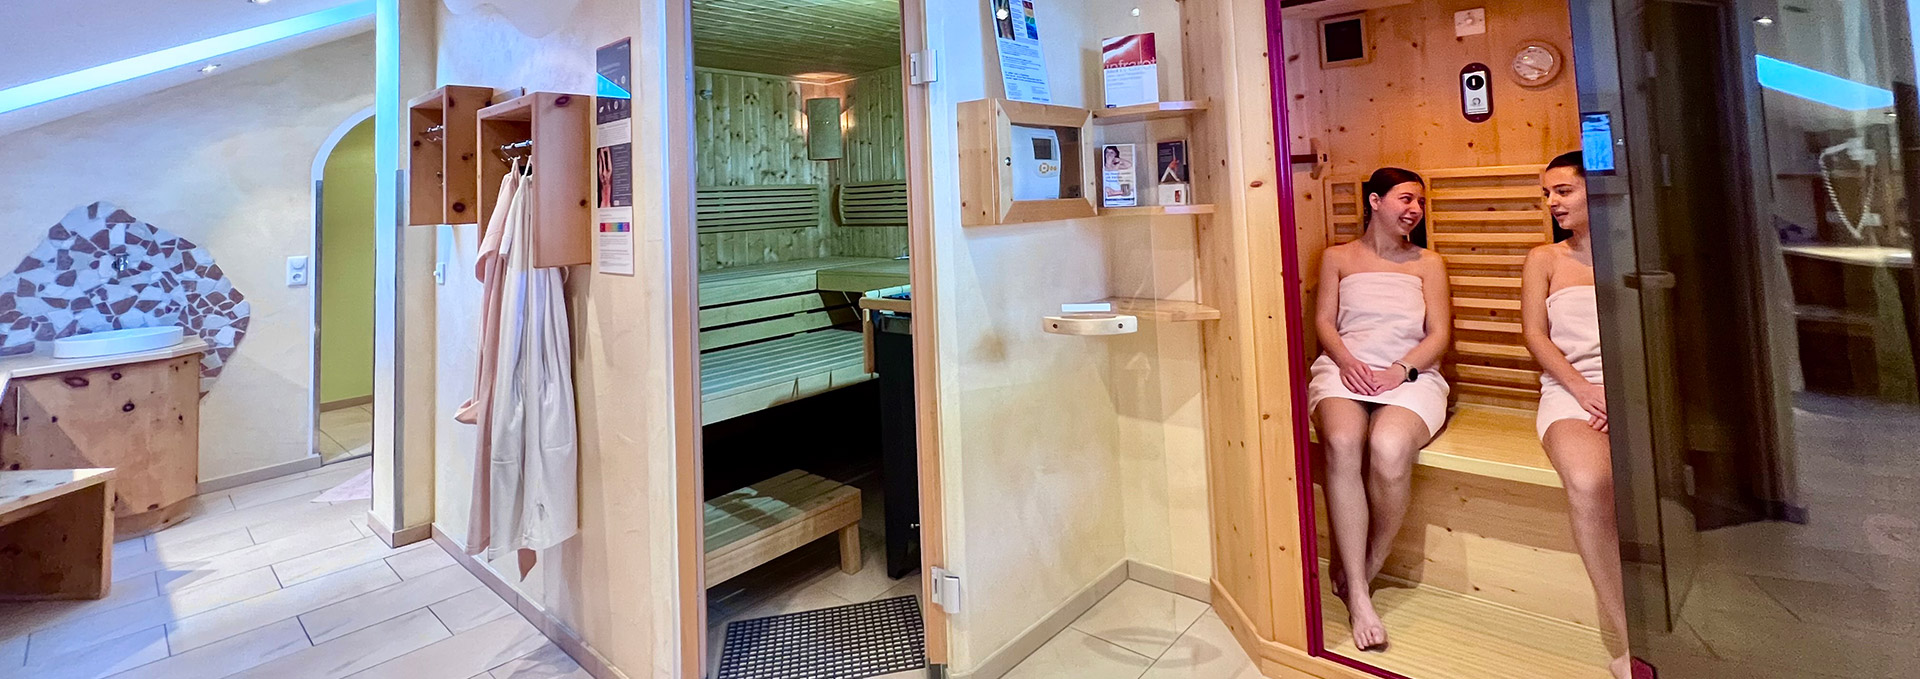 hotel-gruenmoos_sauna-showroom